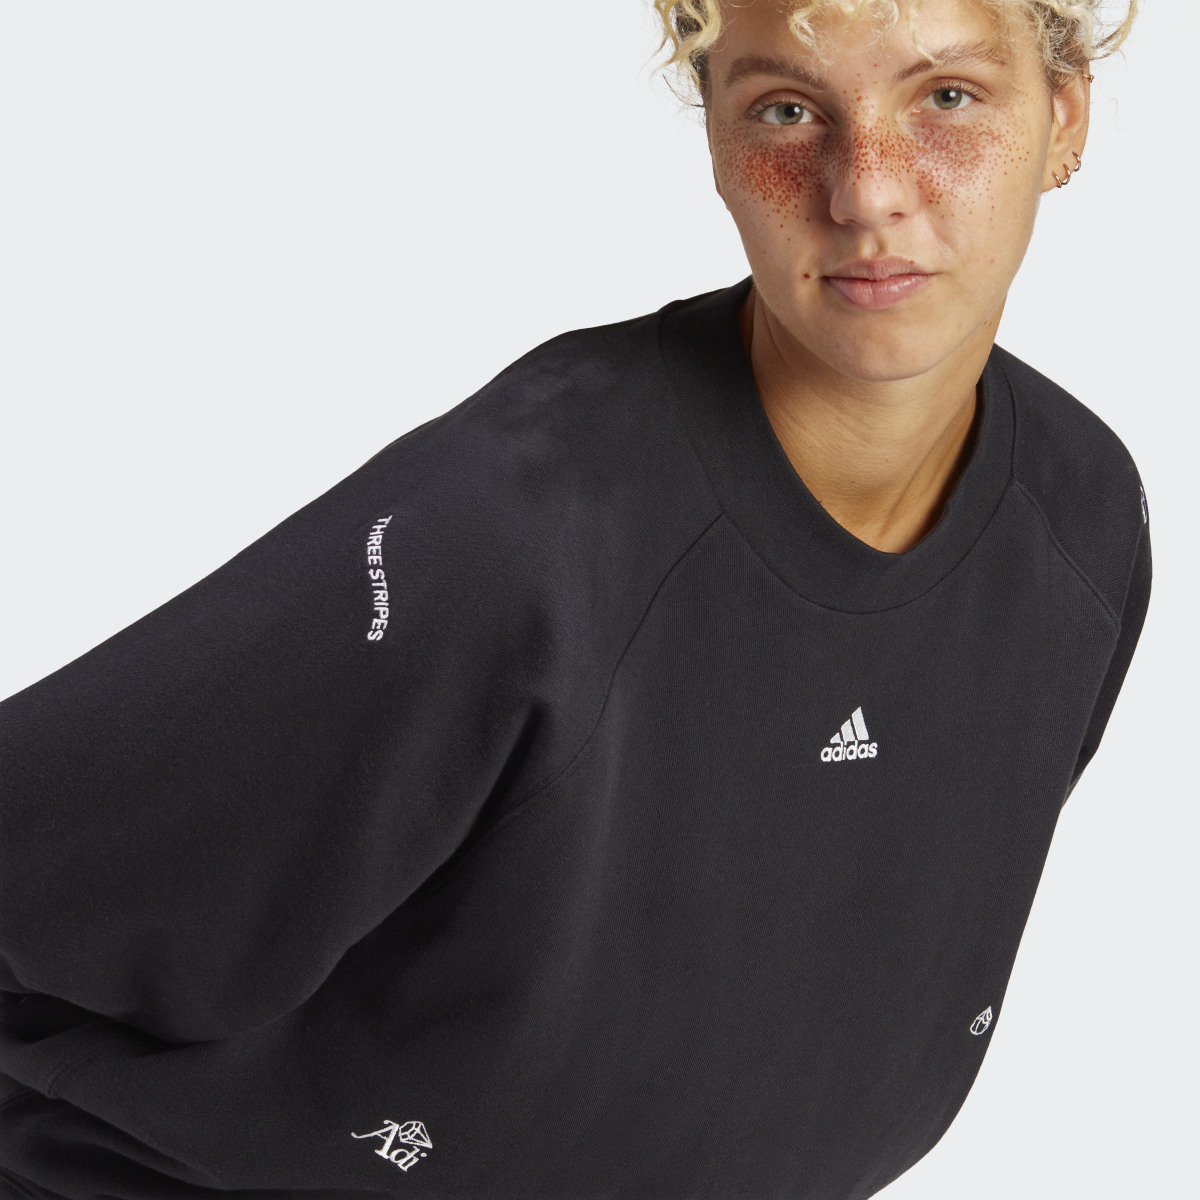 Adidas Healing Crystal-Inspired Graphics Oversized Crewneck Sweatshirt. 6